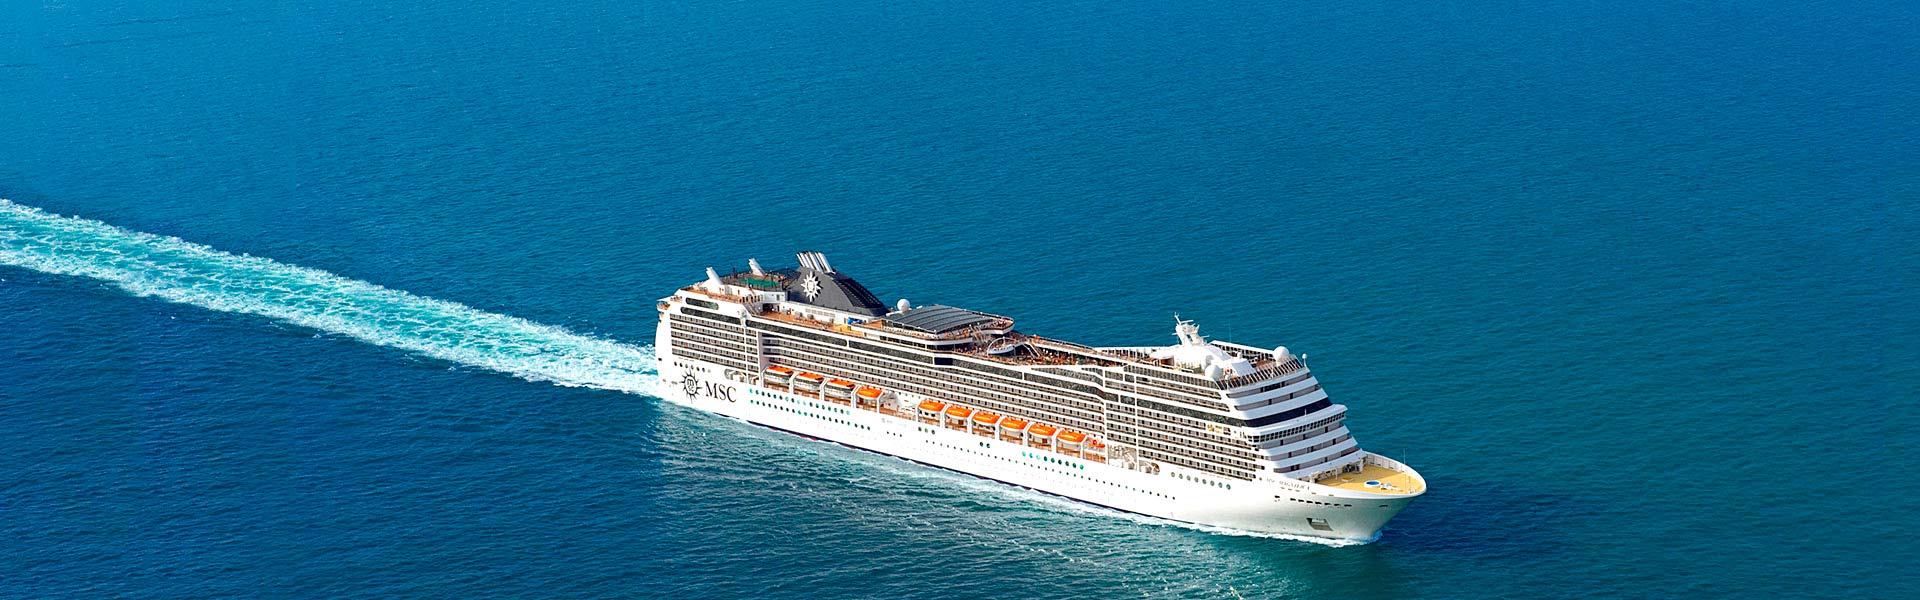 Msc Magnifica World Cruise 2019 2020